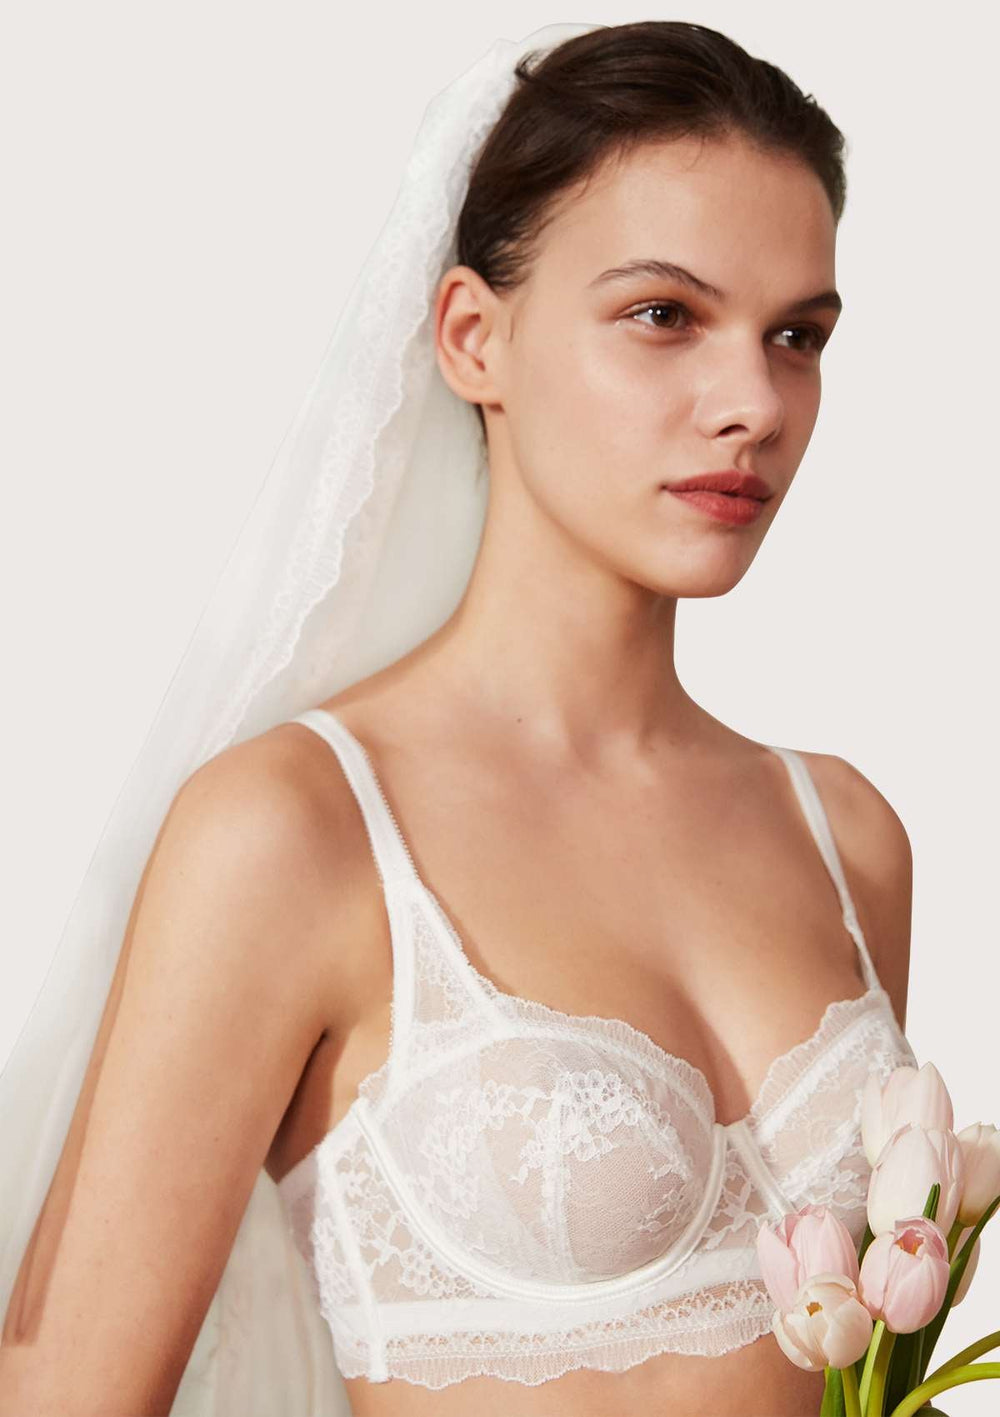 HSIA Floral Lace Unlined Bridal White Balconette Bra Set